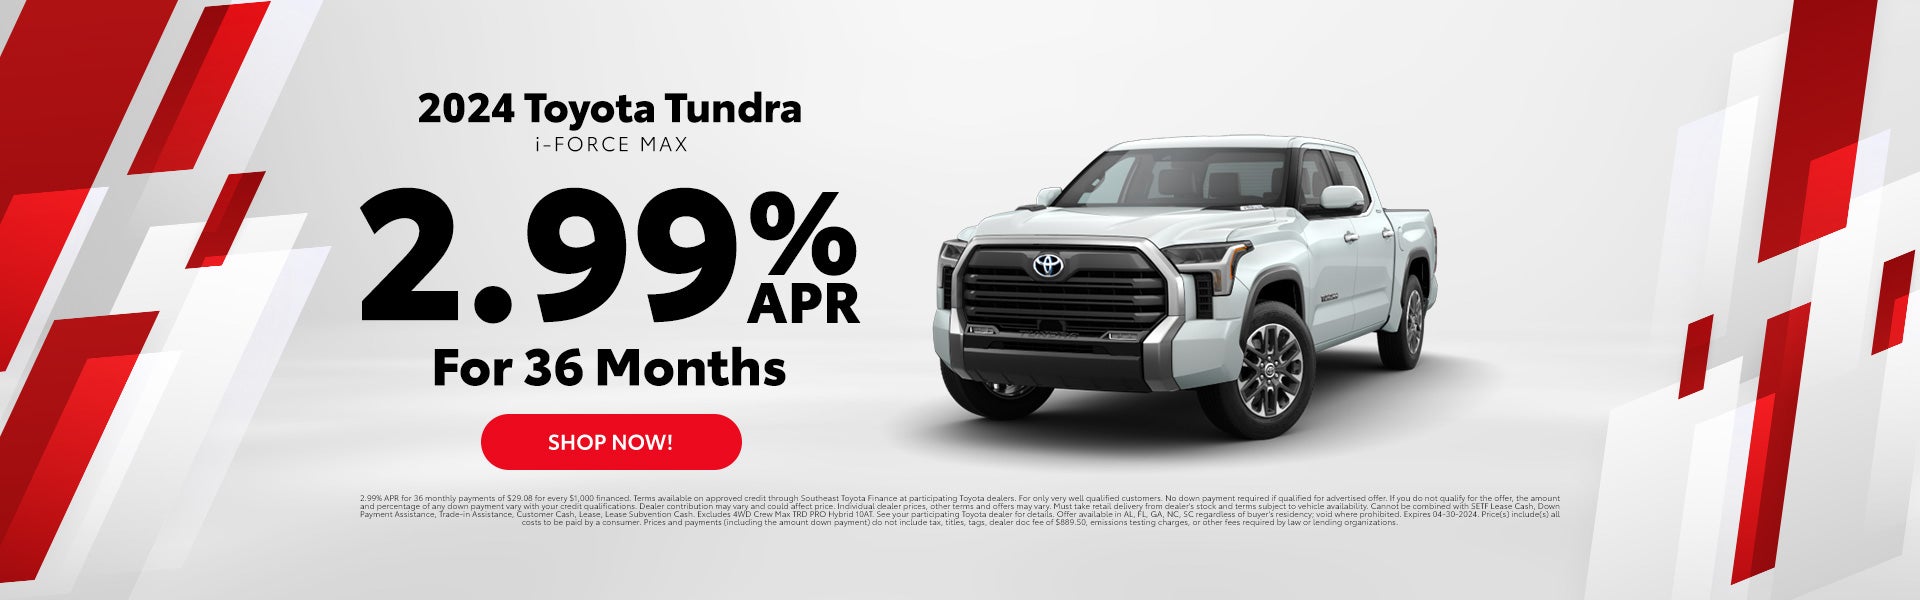 2024 Toyota Tundra Finance Offer